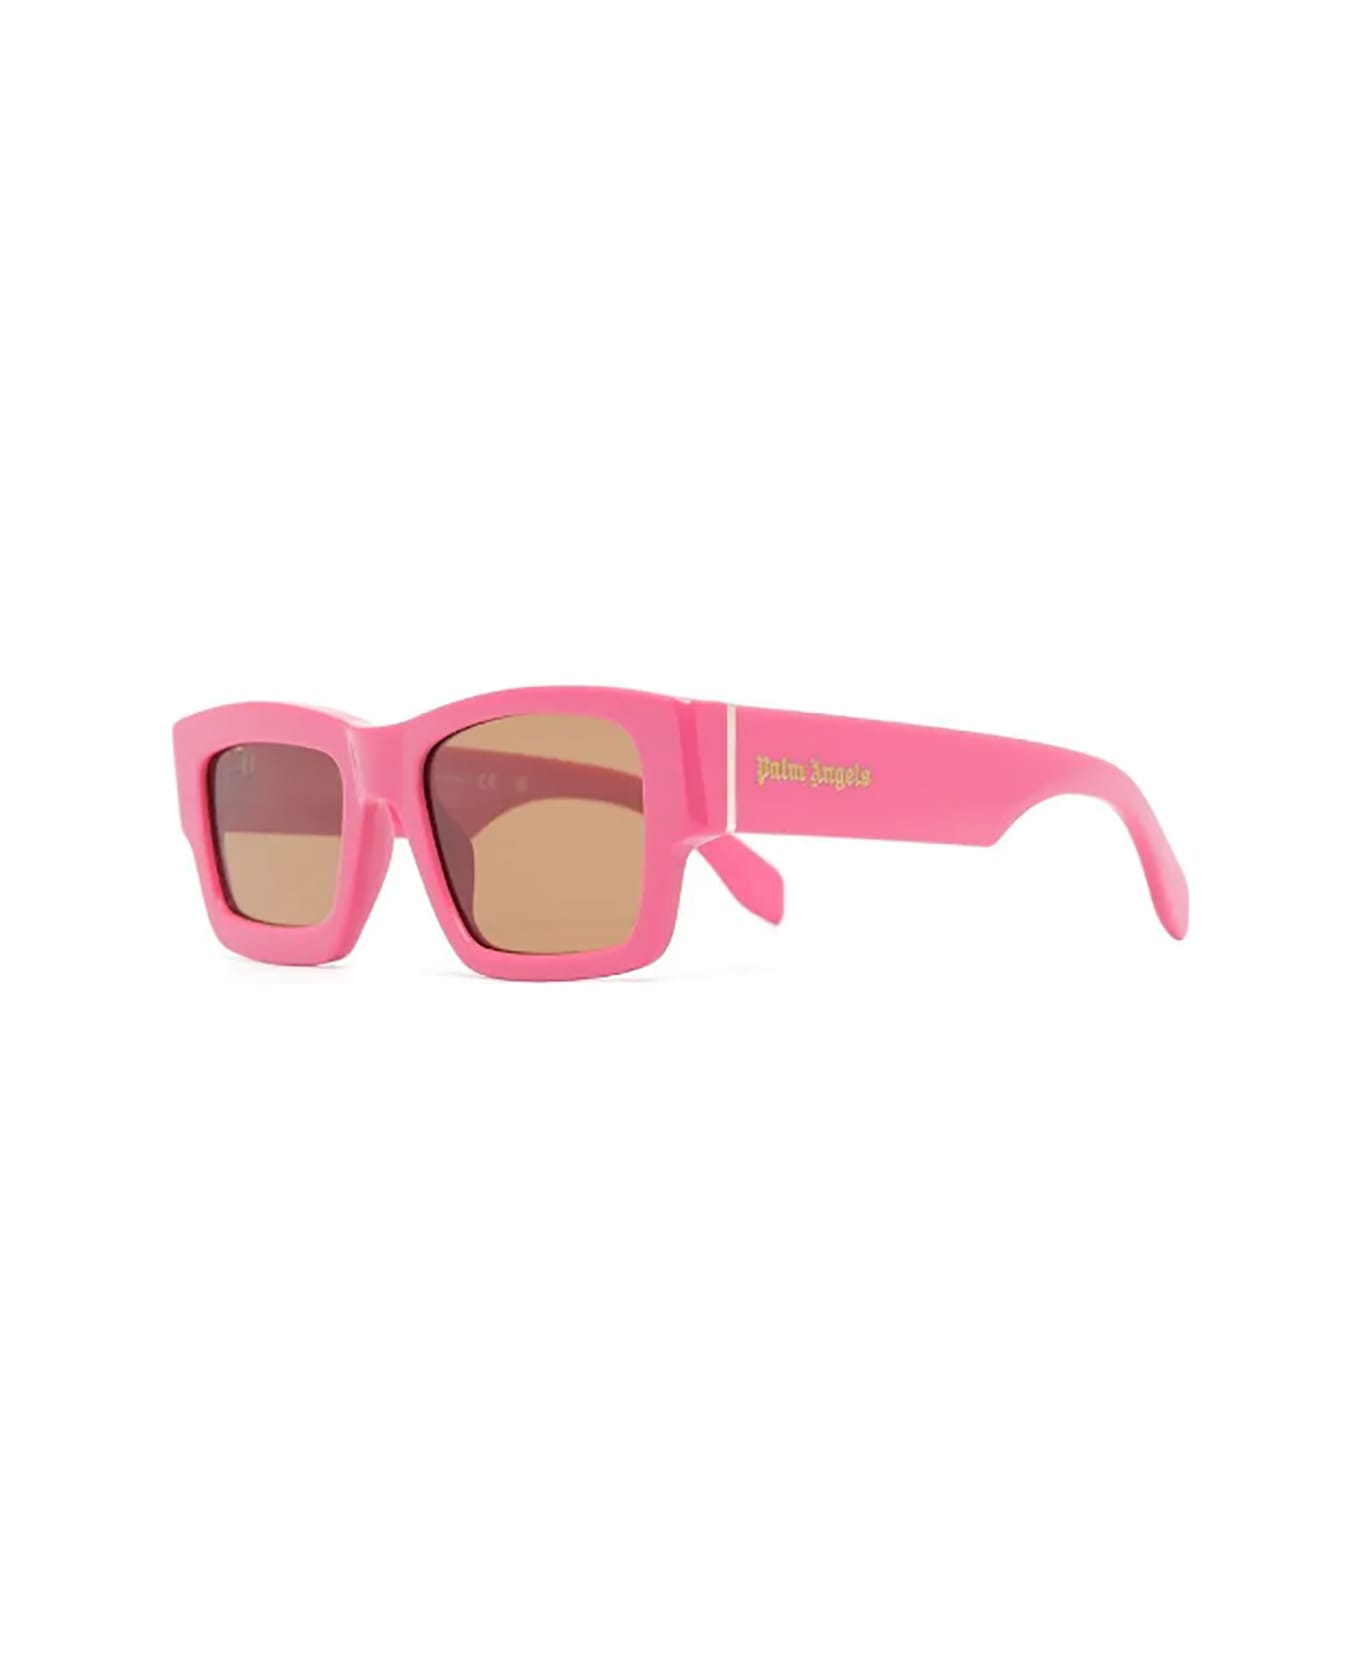 Palm Angels MURRAY SUNGLASSES Sunglasses - Pink サングラス